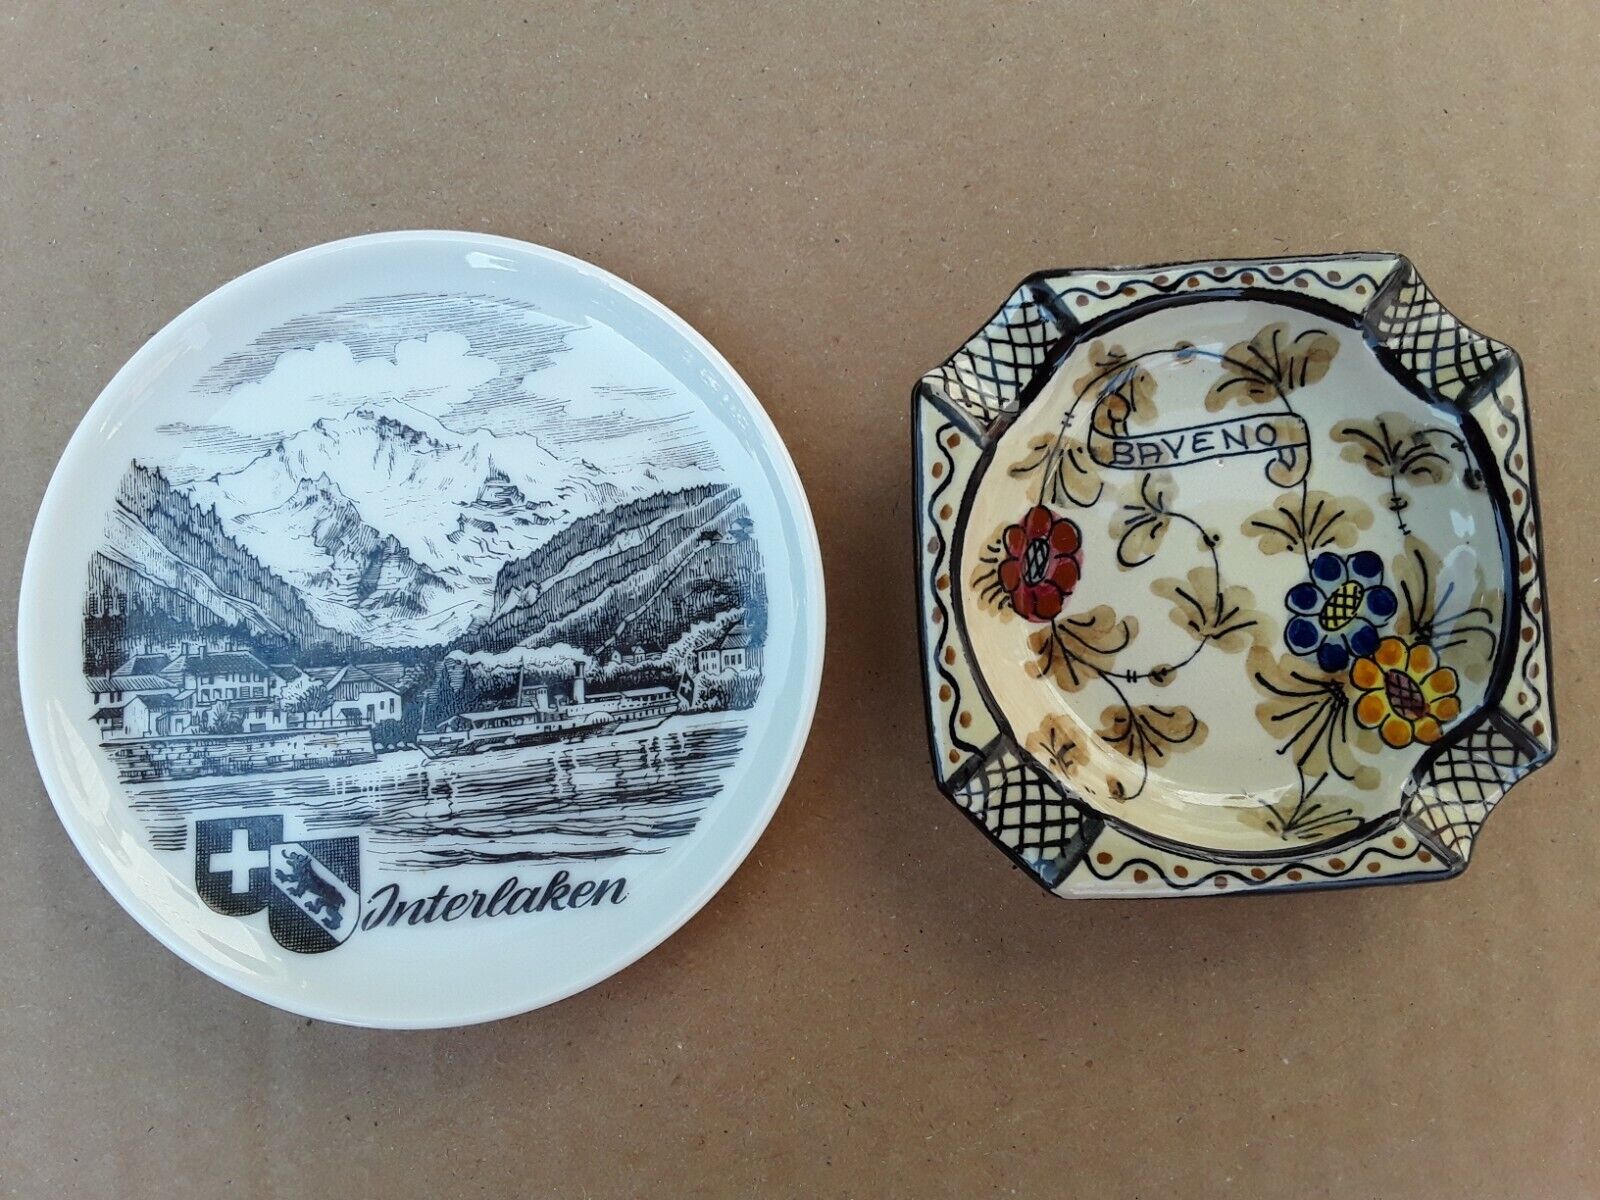 Ashtray Plate Interlaken Switzerland Baveno Italy Porcelain Ceramic Souvenirs